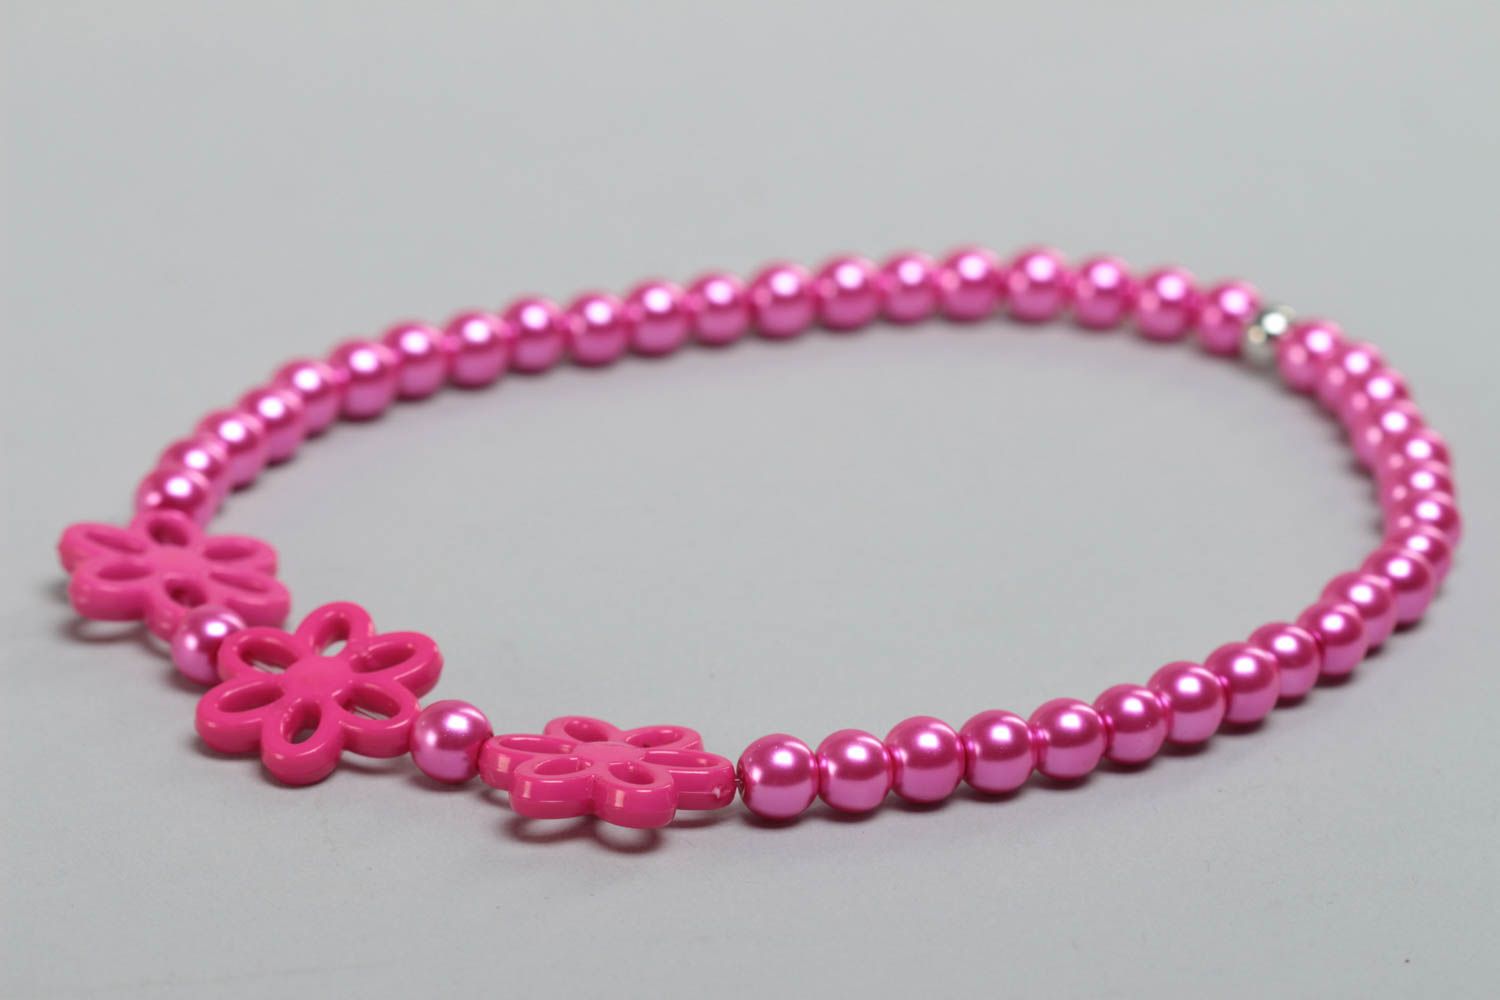 Stylish handmade children's pink bead necklace with flowers designer jewelry photo 3